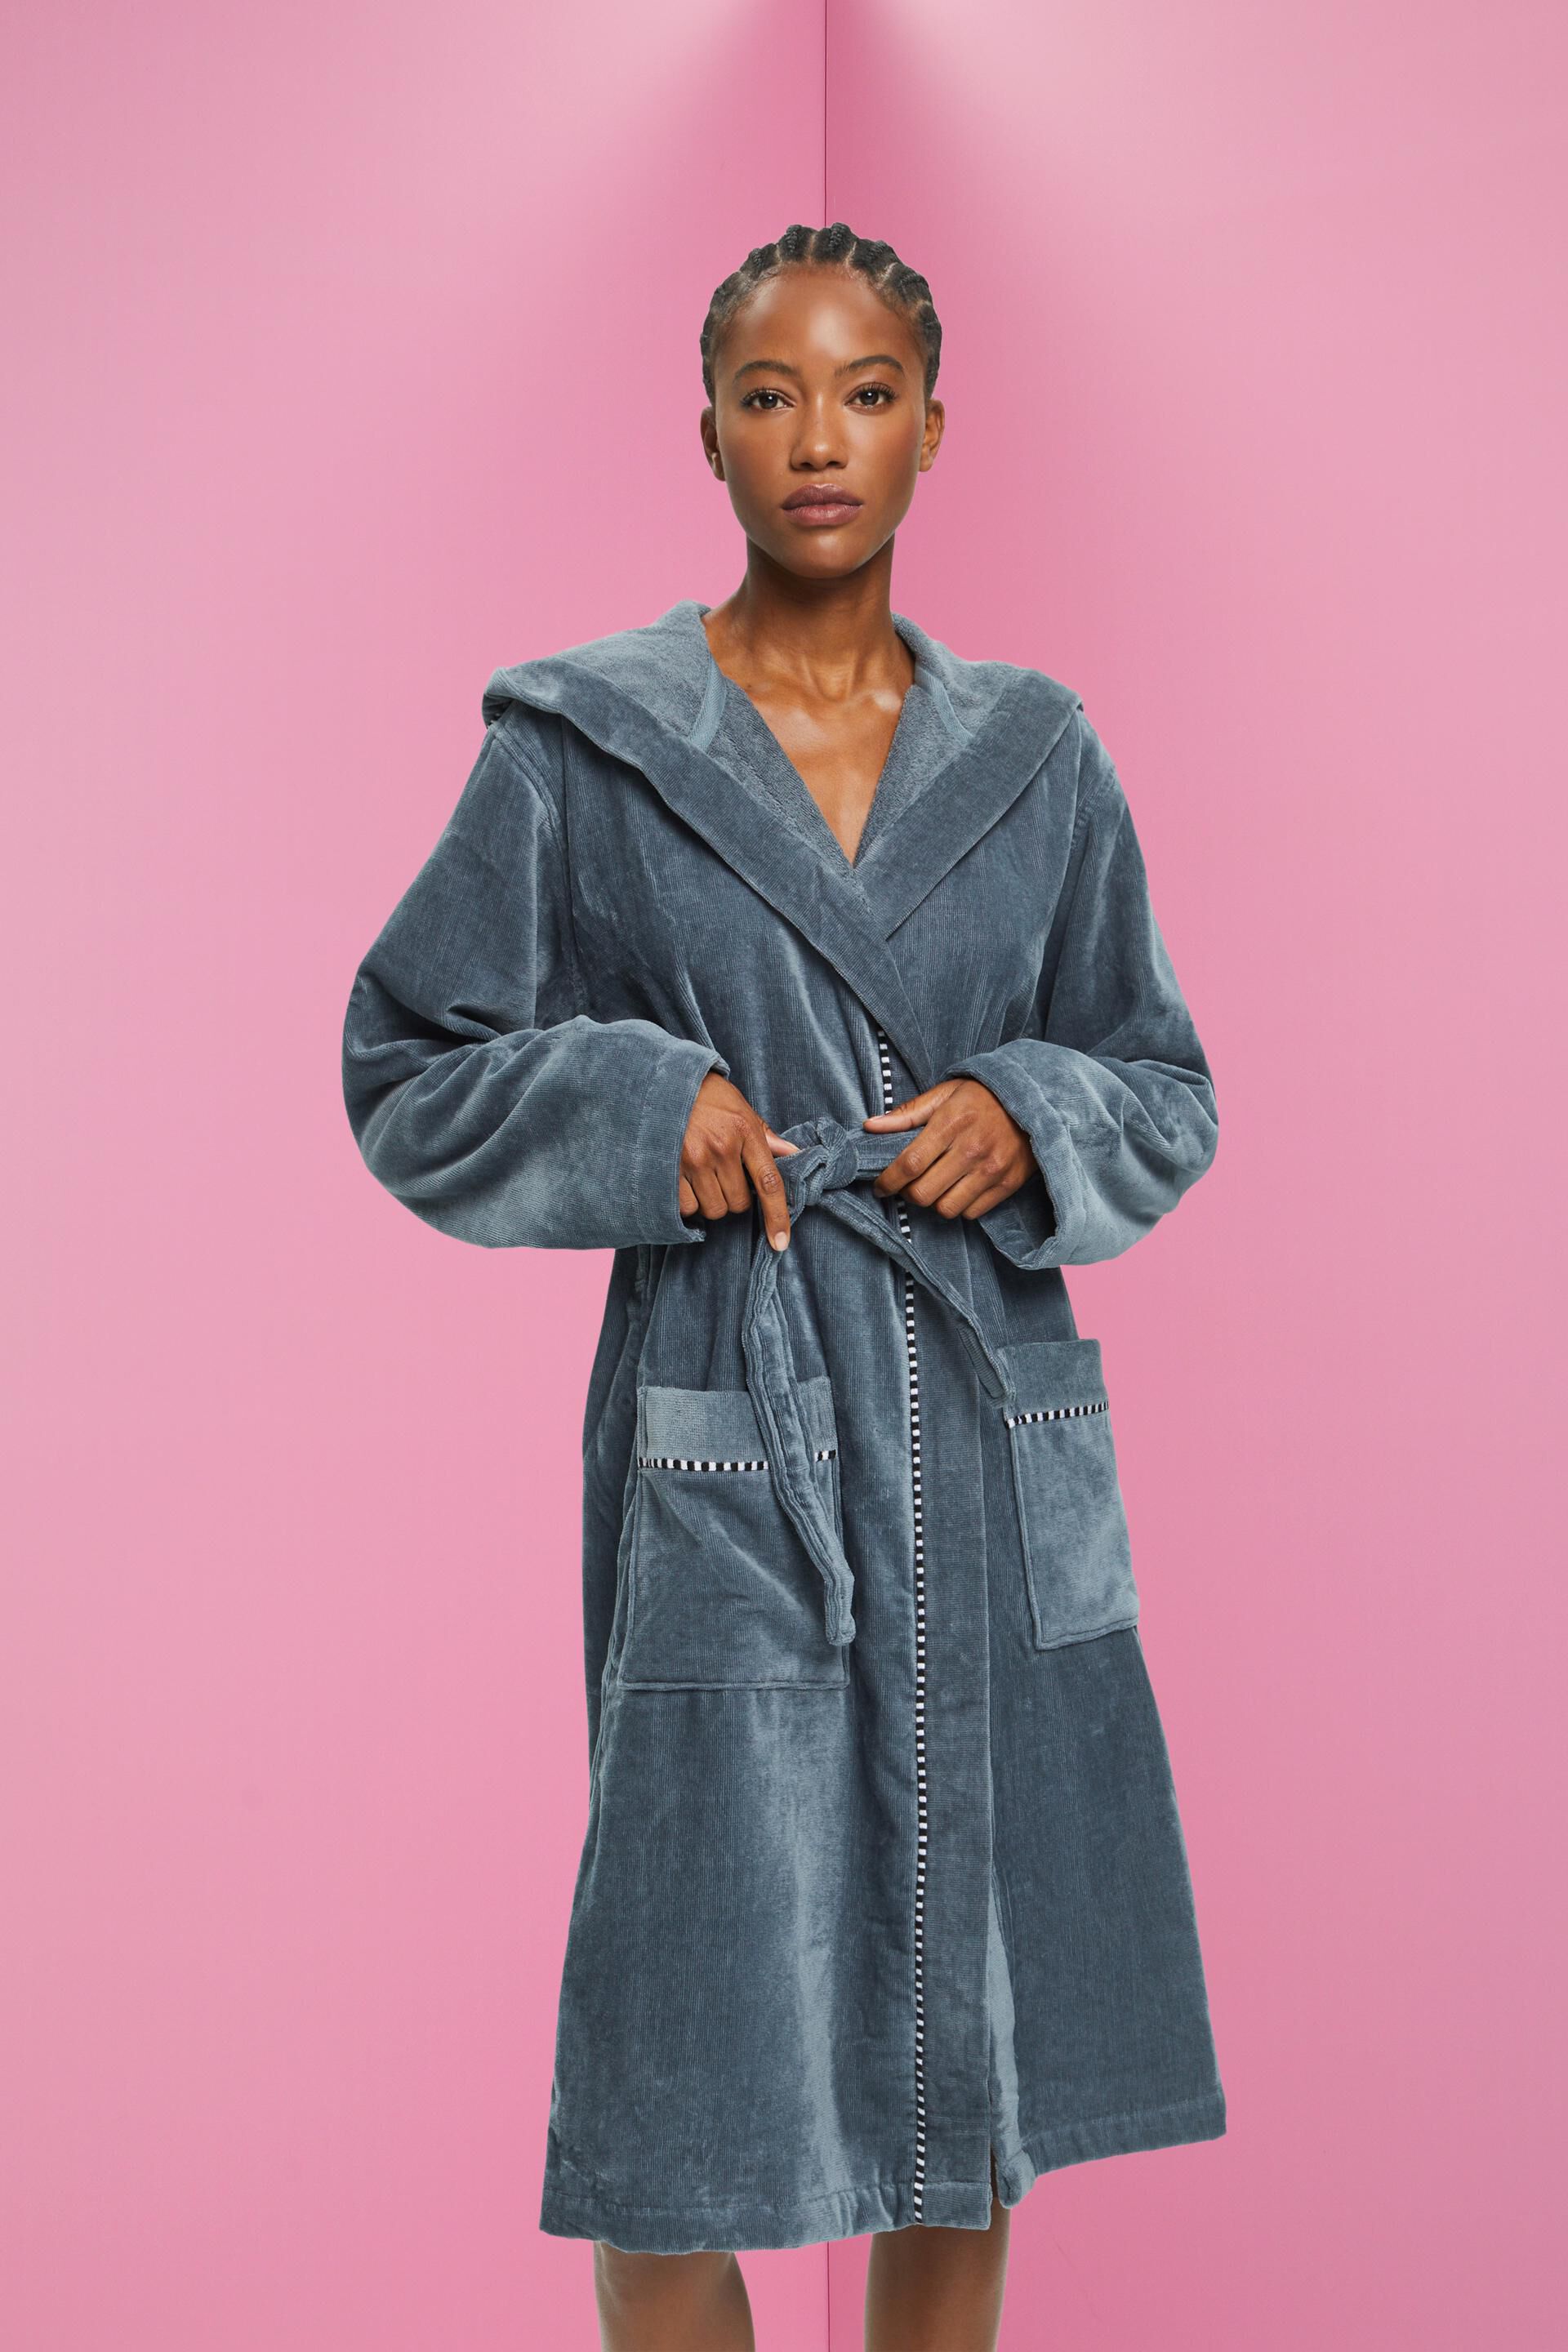 Esprit made bathrobe of 100% Suede cotton